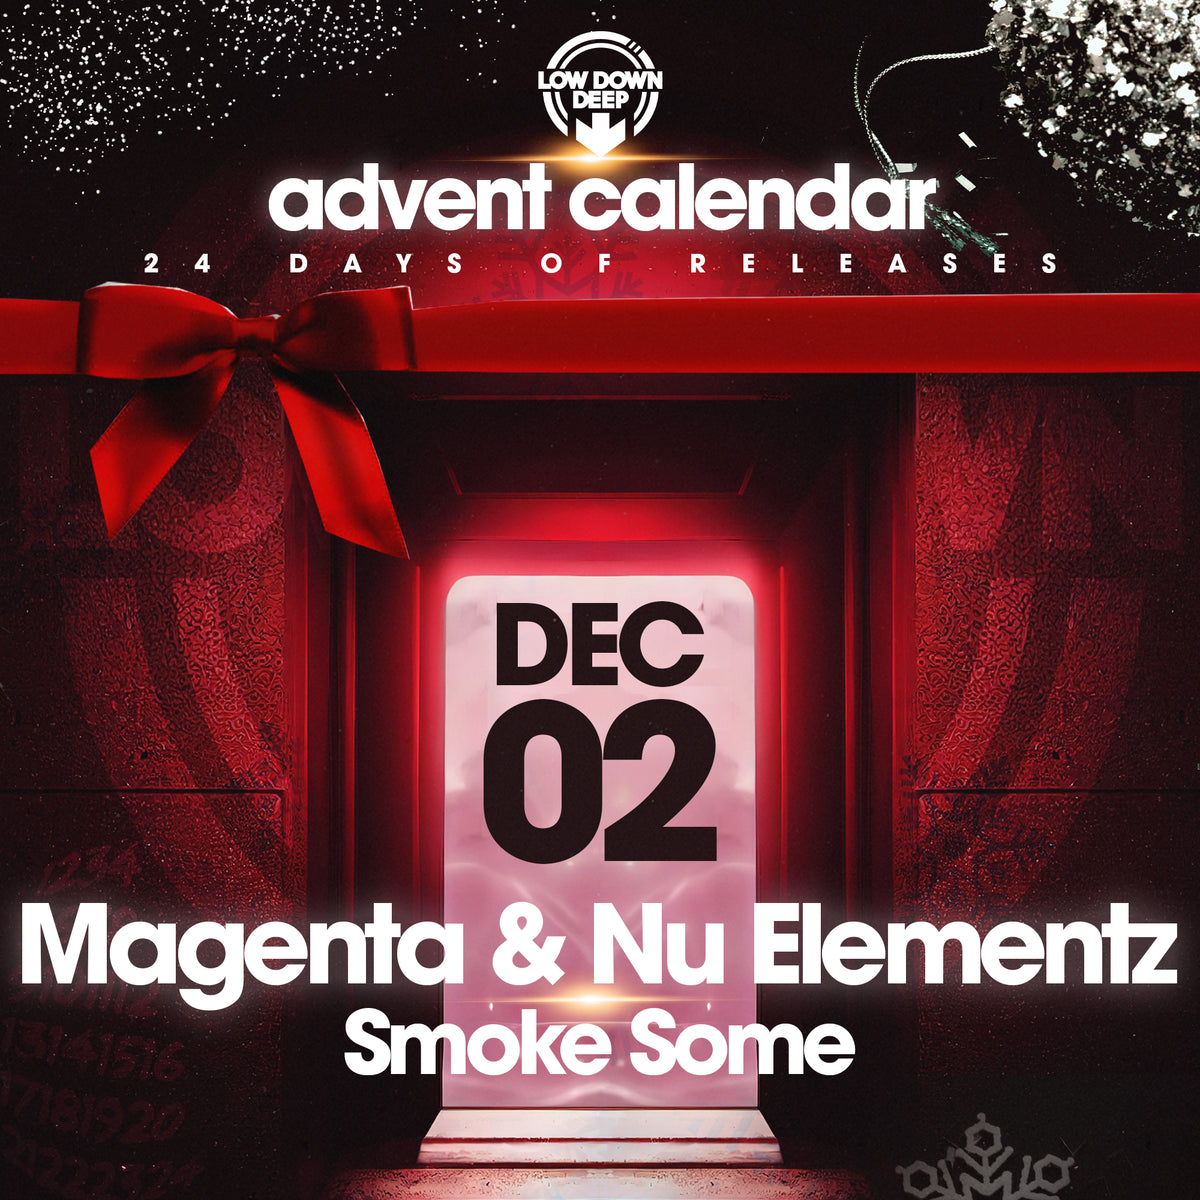 LDDRADV002 -Magenta & Nu Elementz 'Smoke Some'